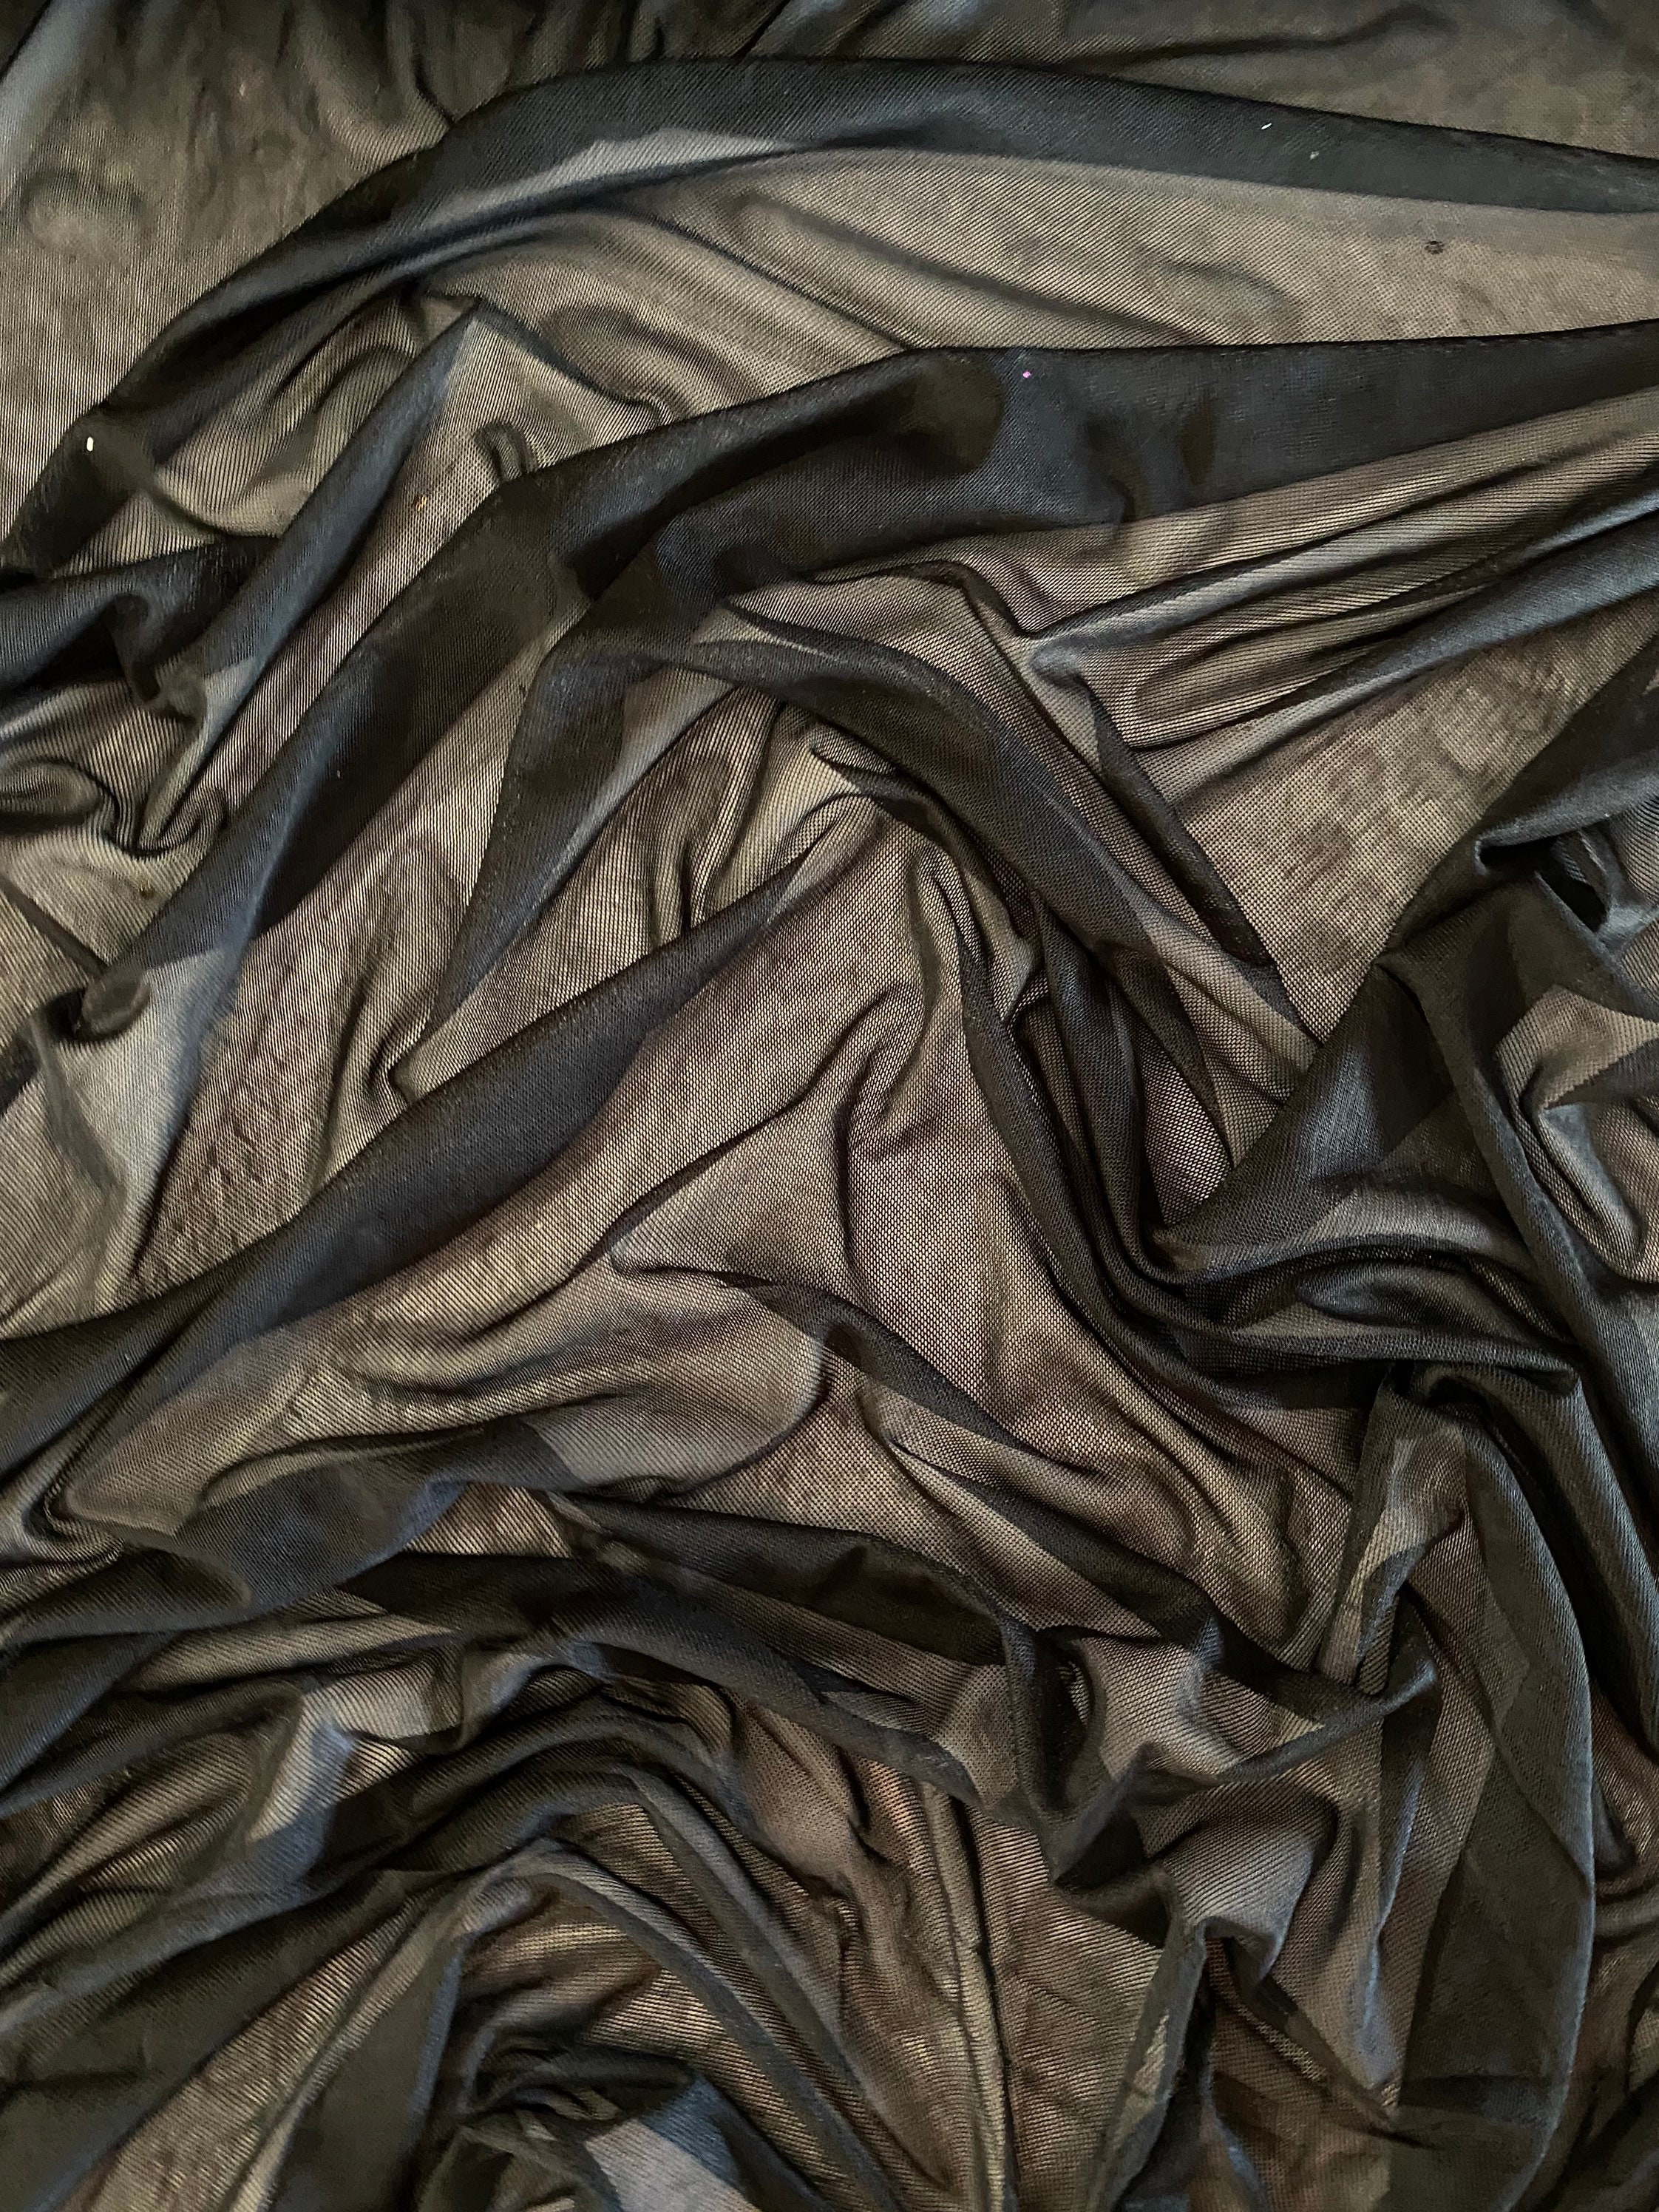 Black Nylon Power Mesh Fabric by the Yard, Soft Sheer Drape Mesh